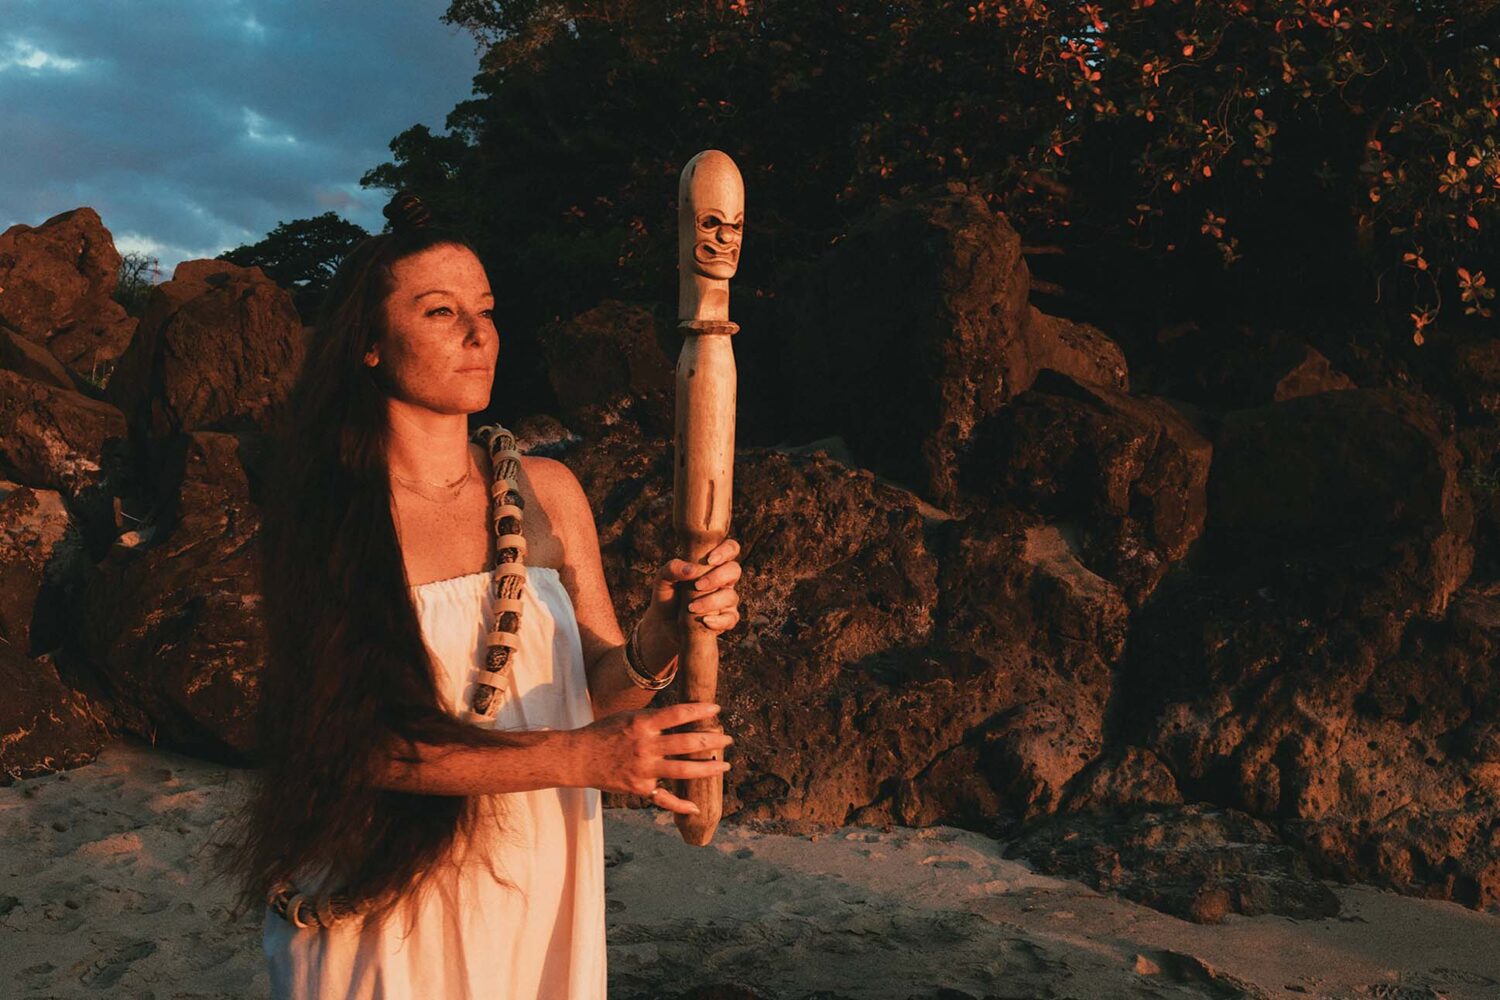 ceremonialist holding a hawaiian ceremonial wooden sculpture